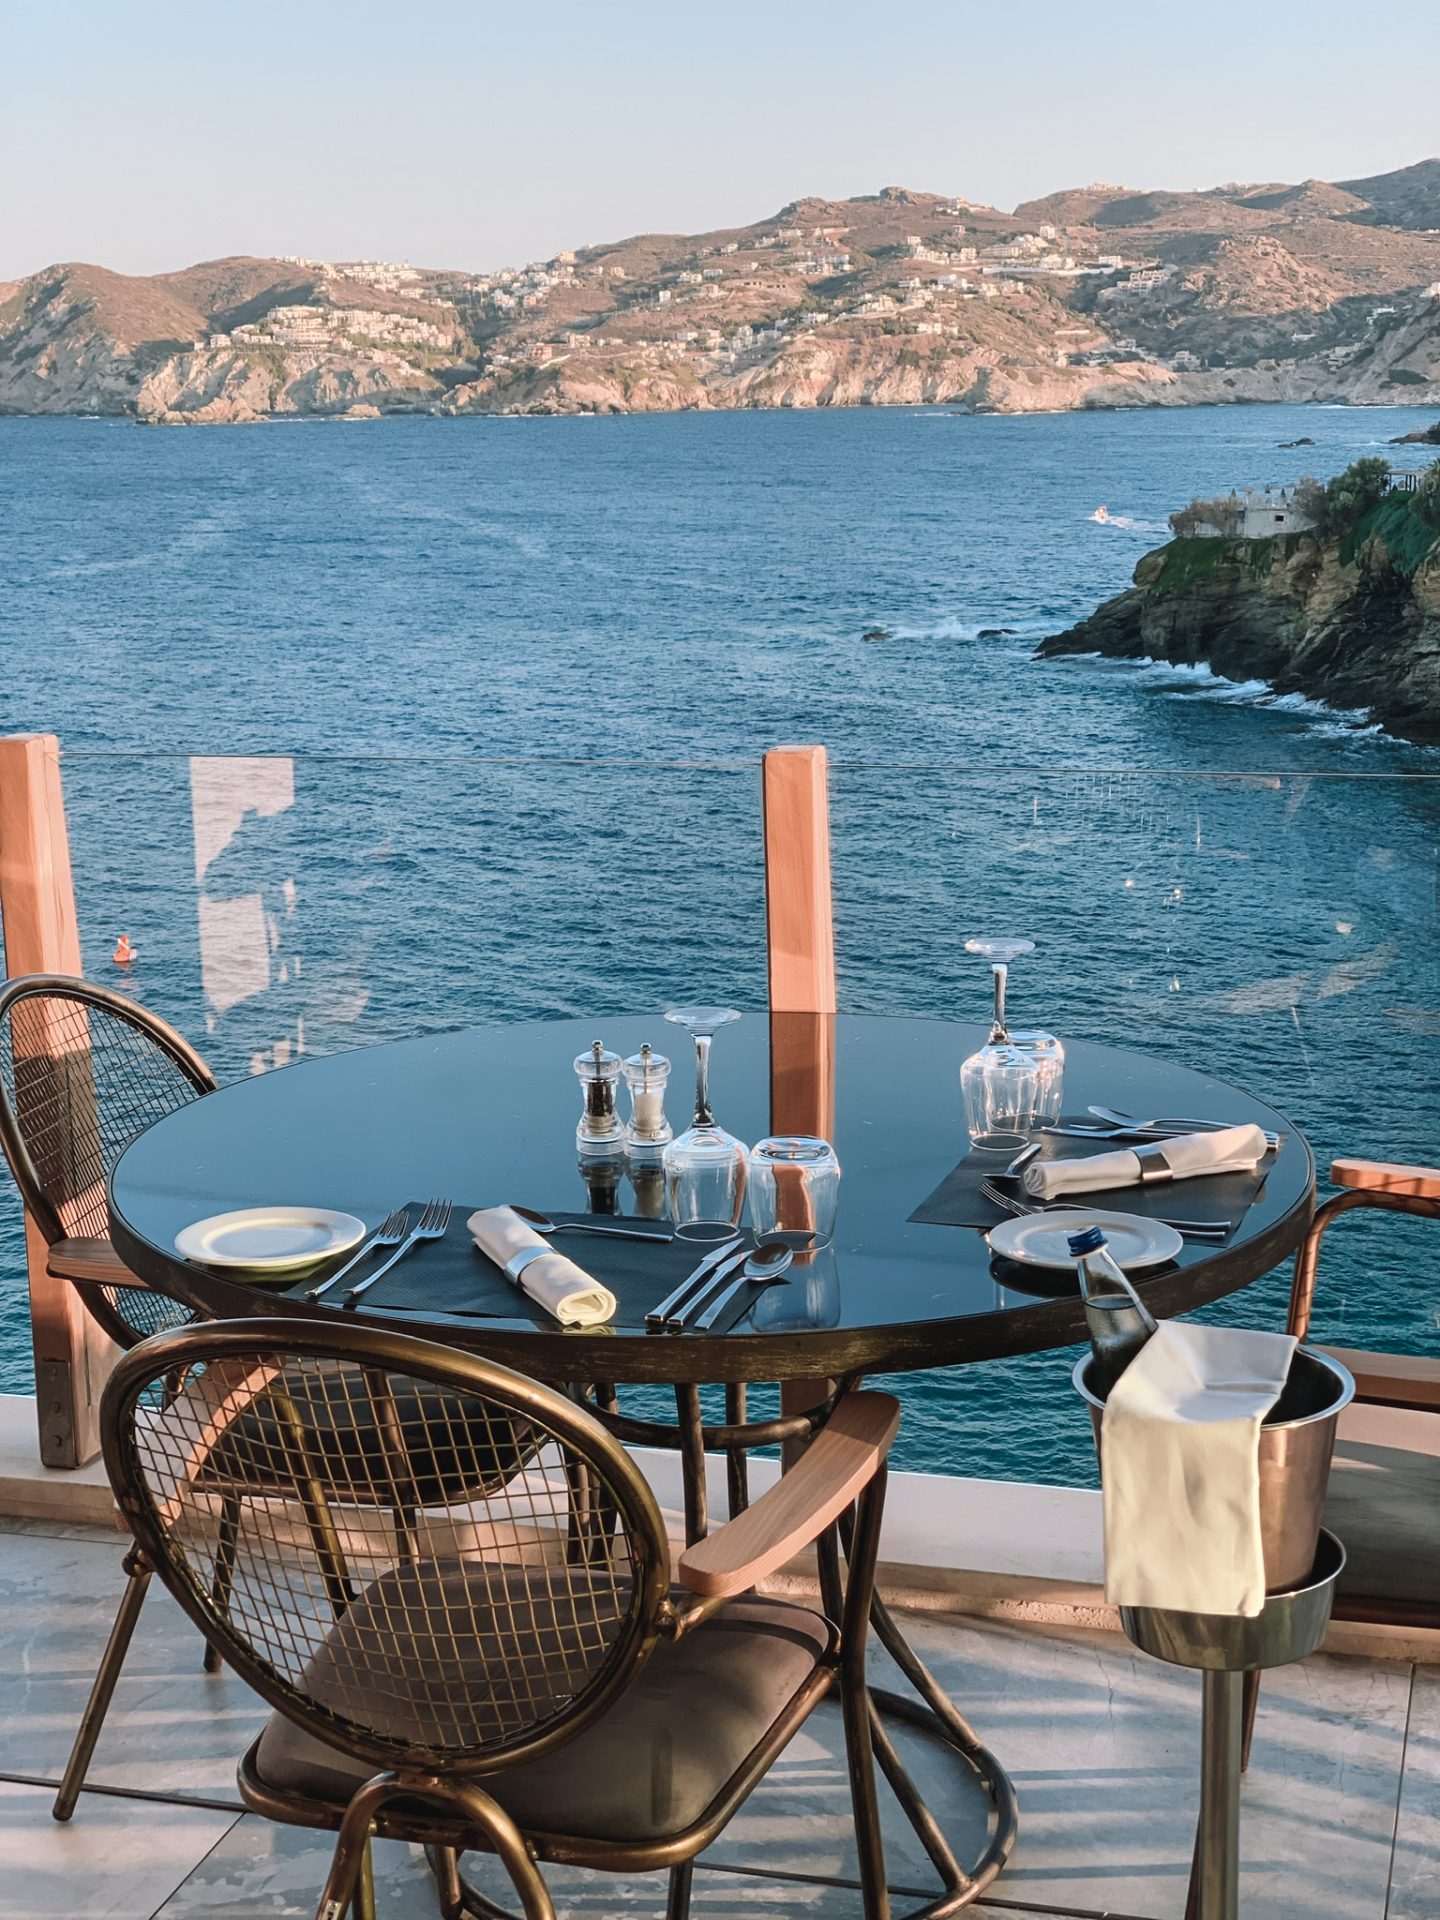 Sea Side Resort and Spa | Kulinarium Gourmet Restaurant | Lobster Night | Crete Greece